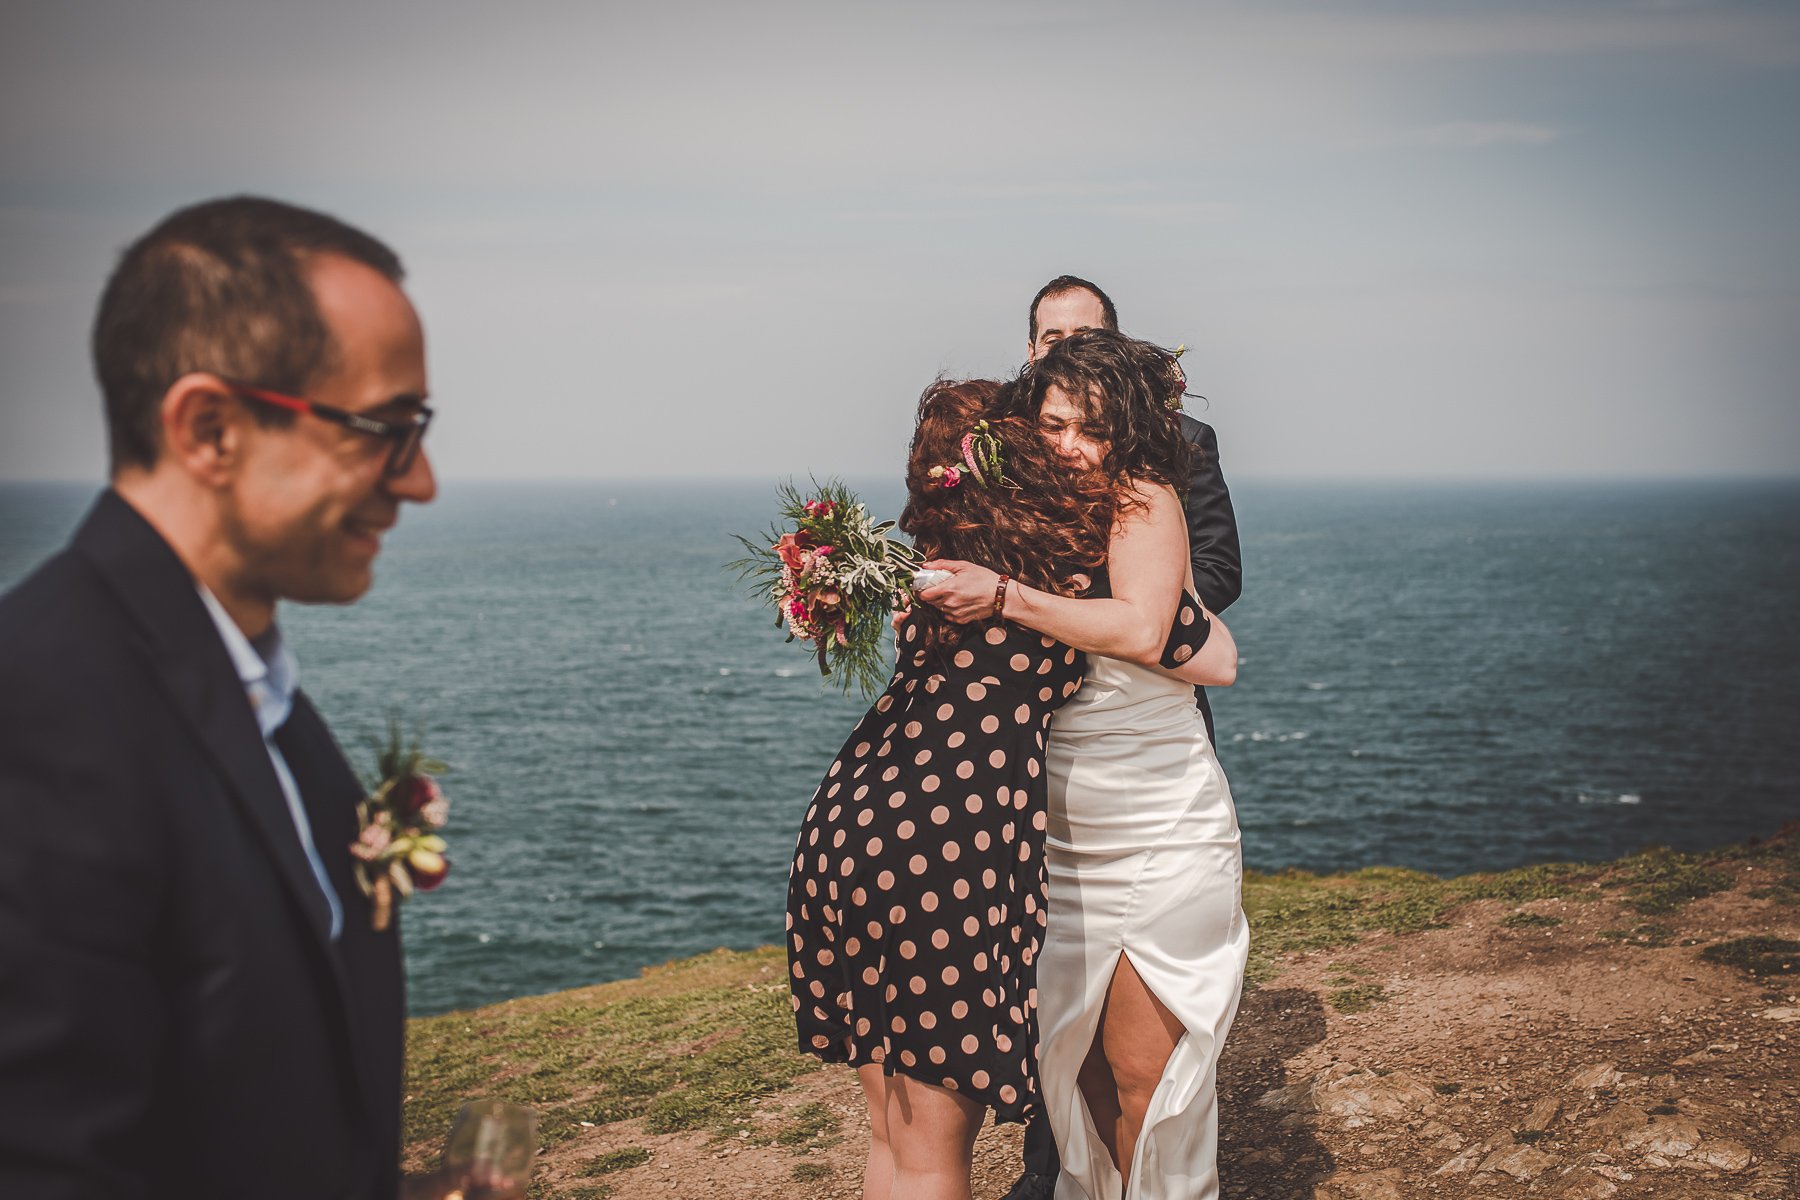 Cornwall wedding photographer - U got the love 50.jpg